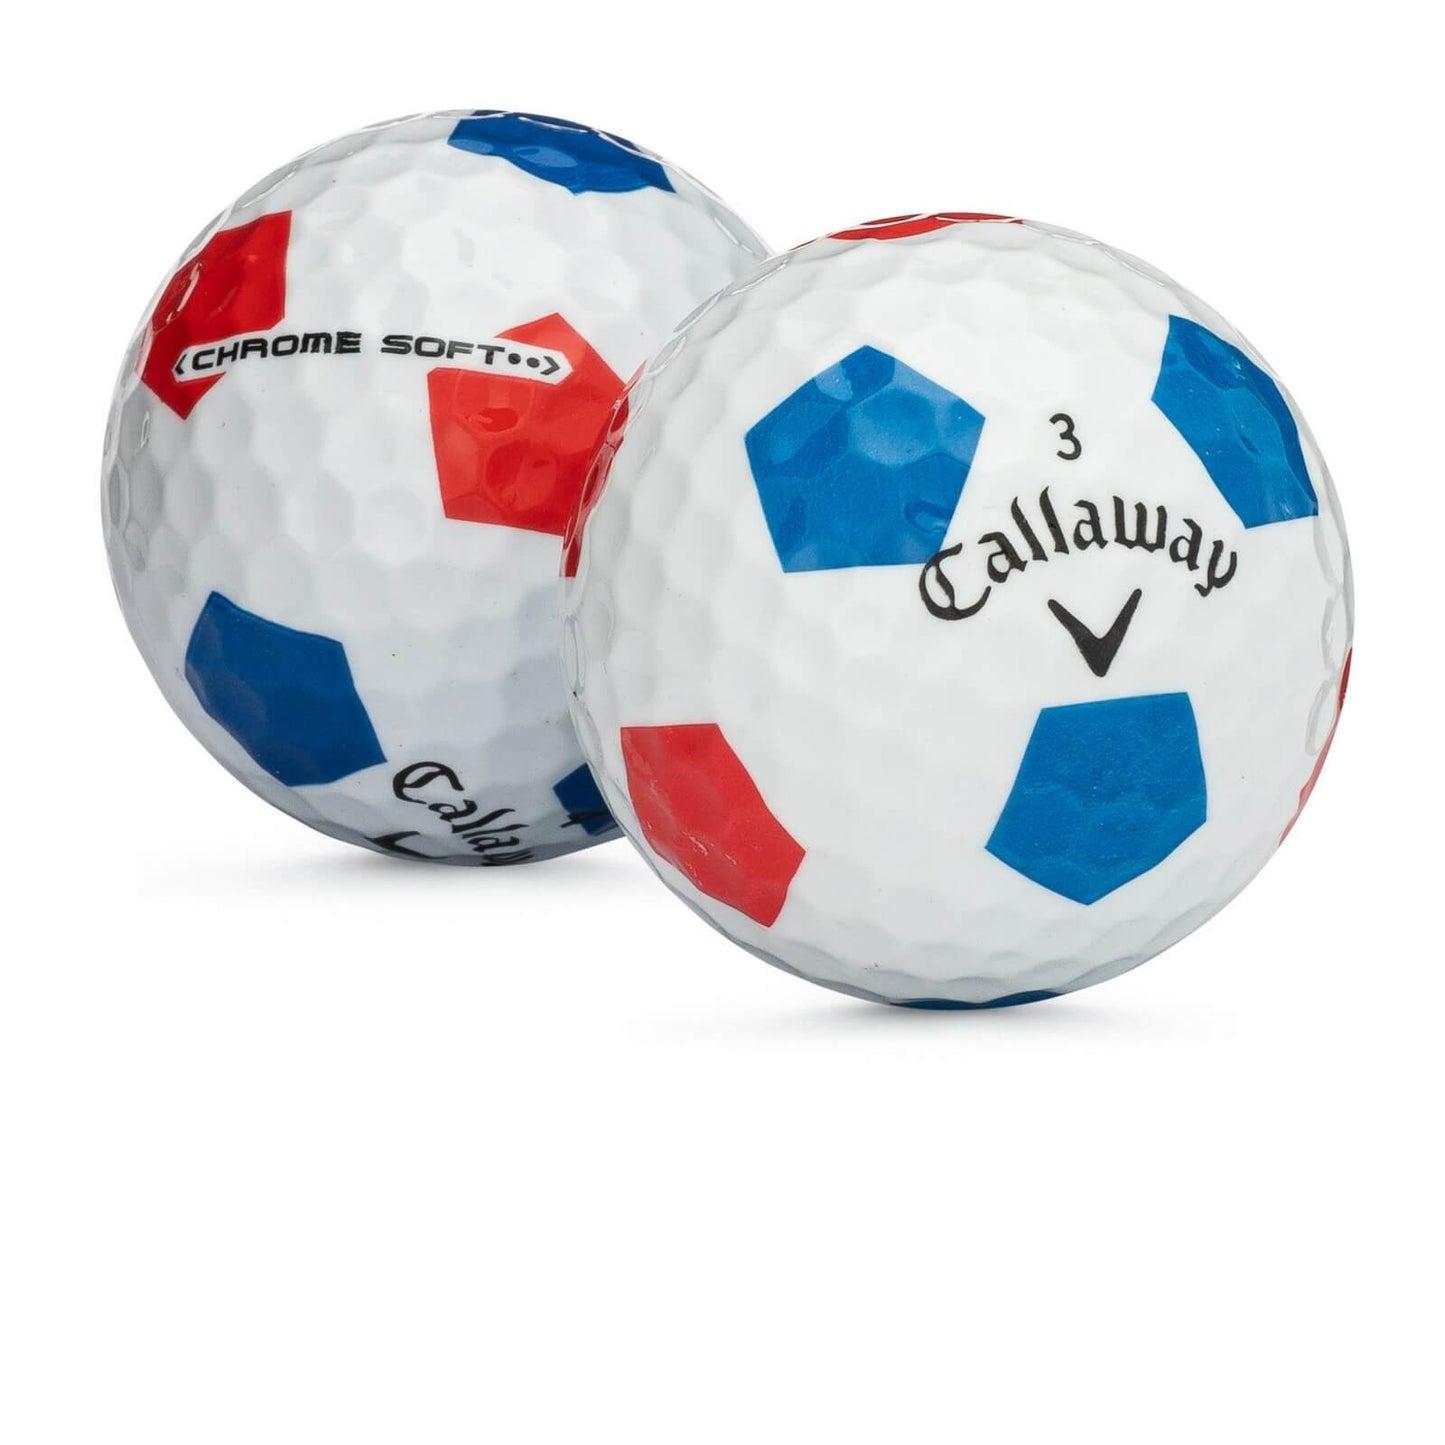 Used Callaway Chrome Soft Truvis Red, White, & Blue Golf Balls - 1 Dozen